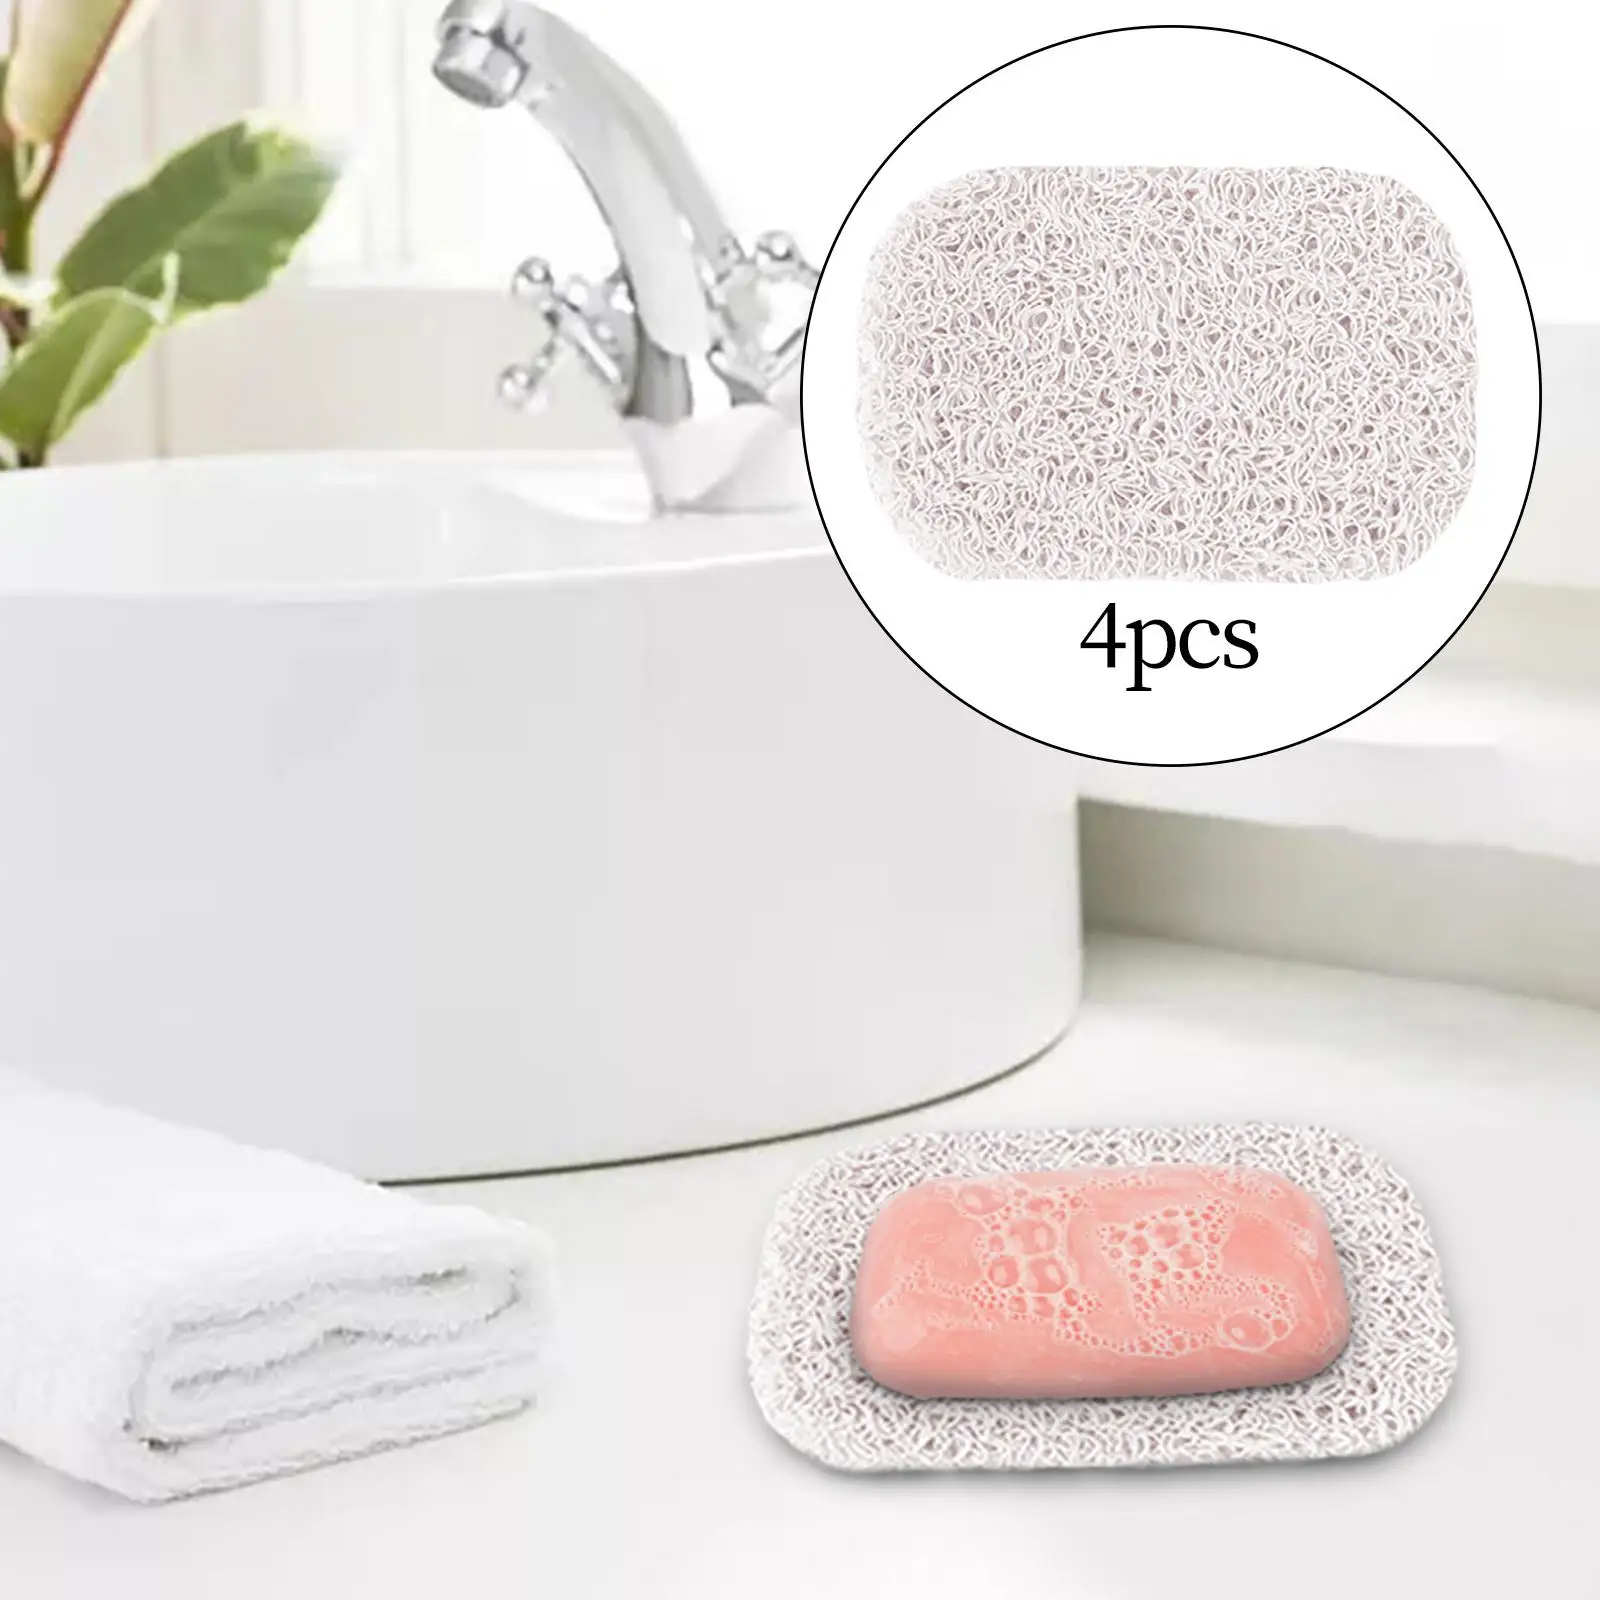 PVC Soap Saver Self Draining Accessory Nonslip Durable Soap Bar Holder for Sink Bath